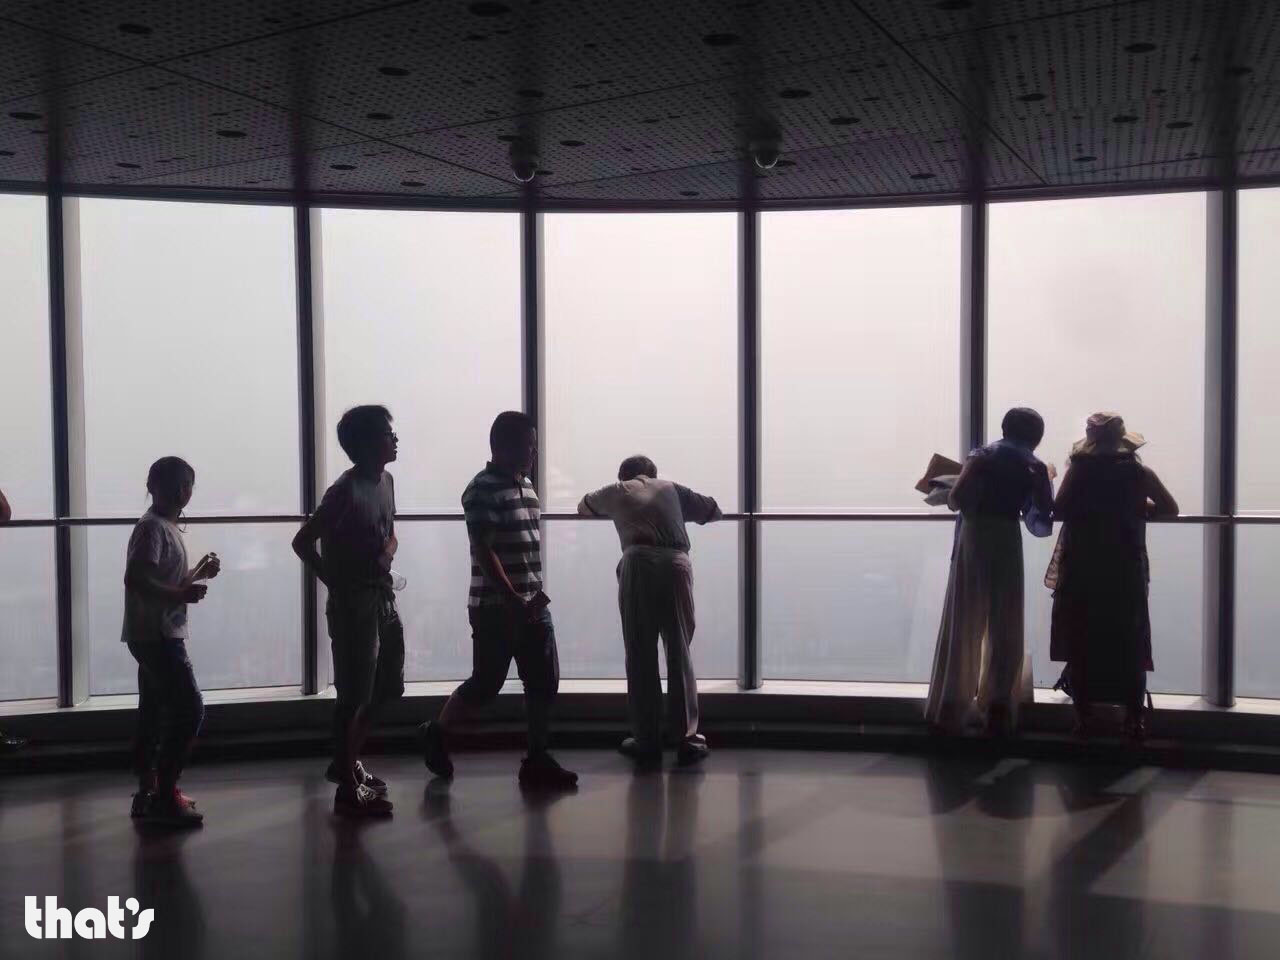 Shanghai Tower observatory